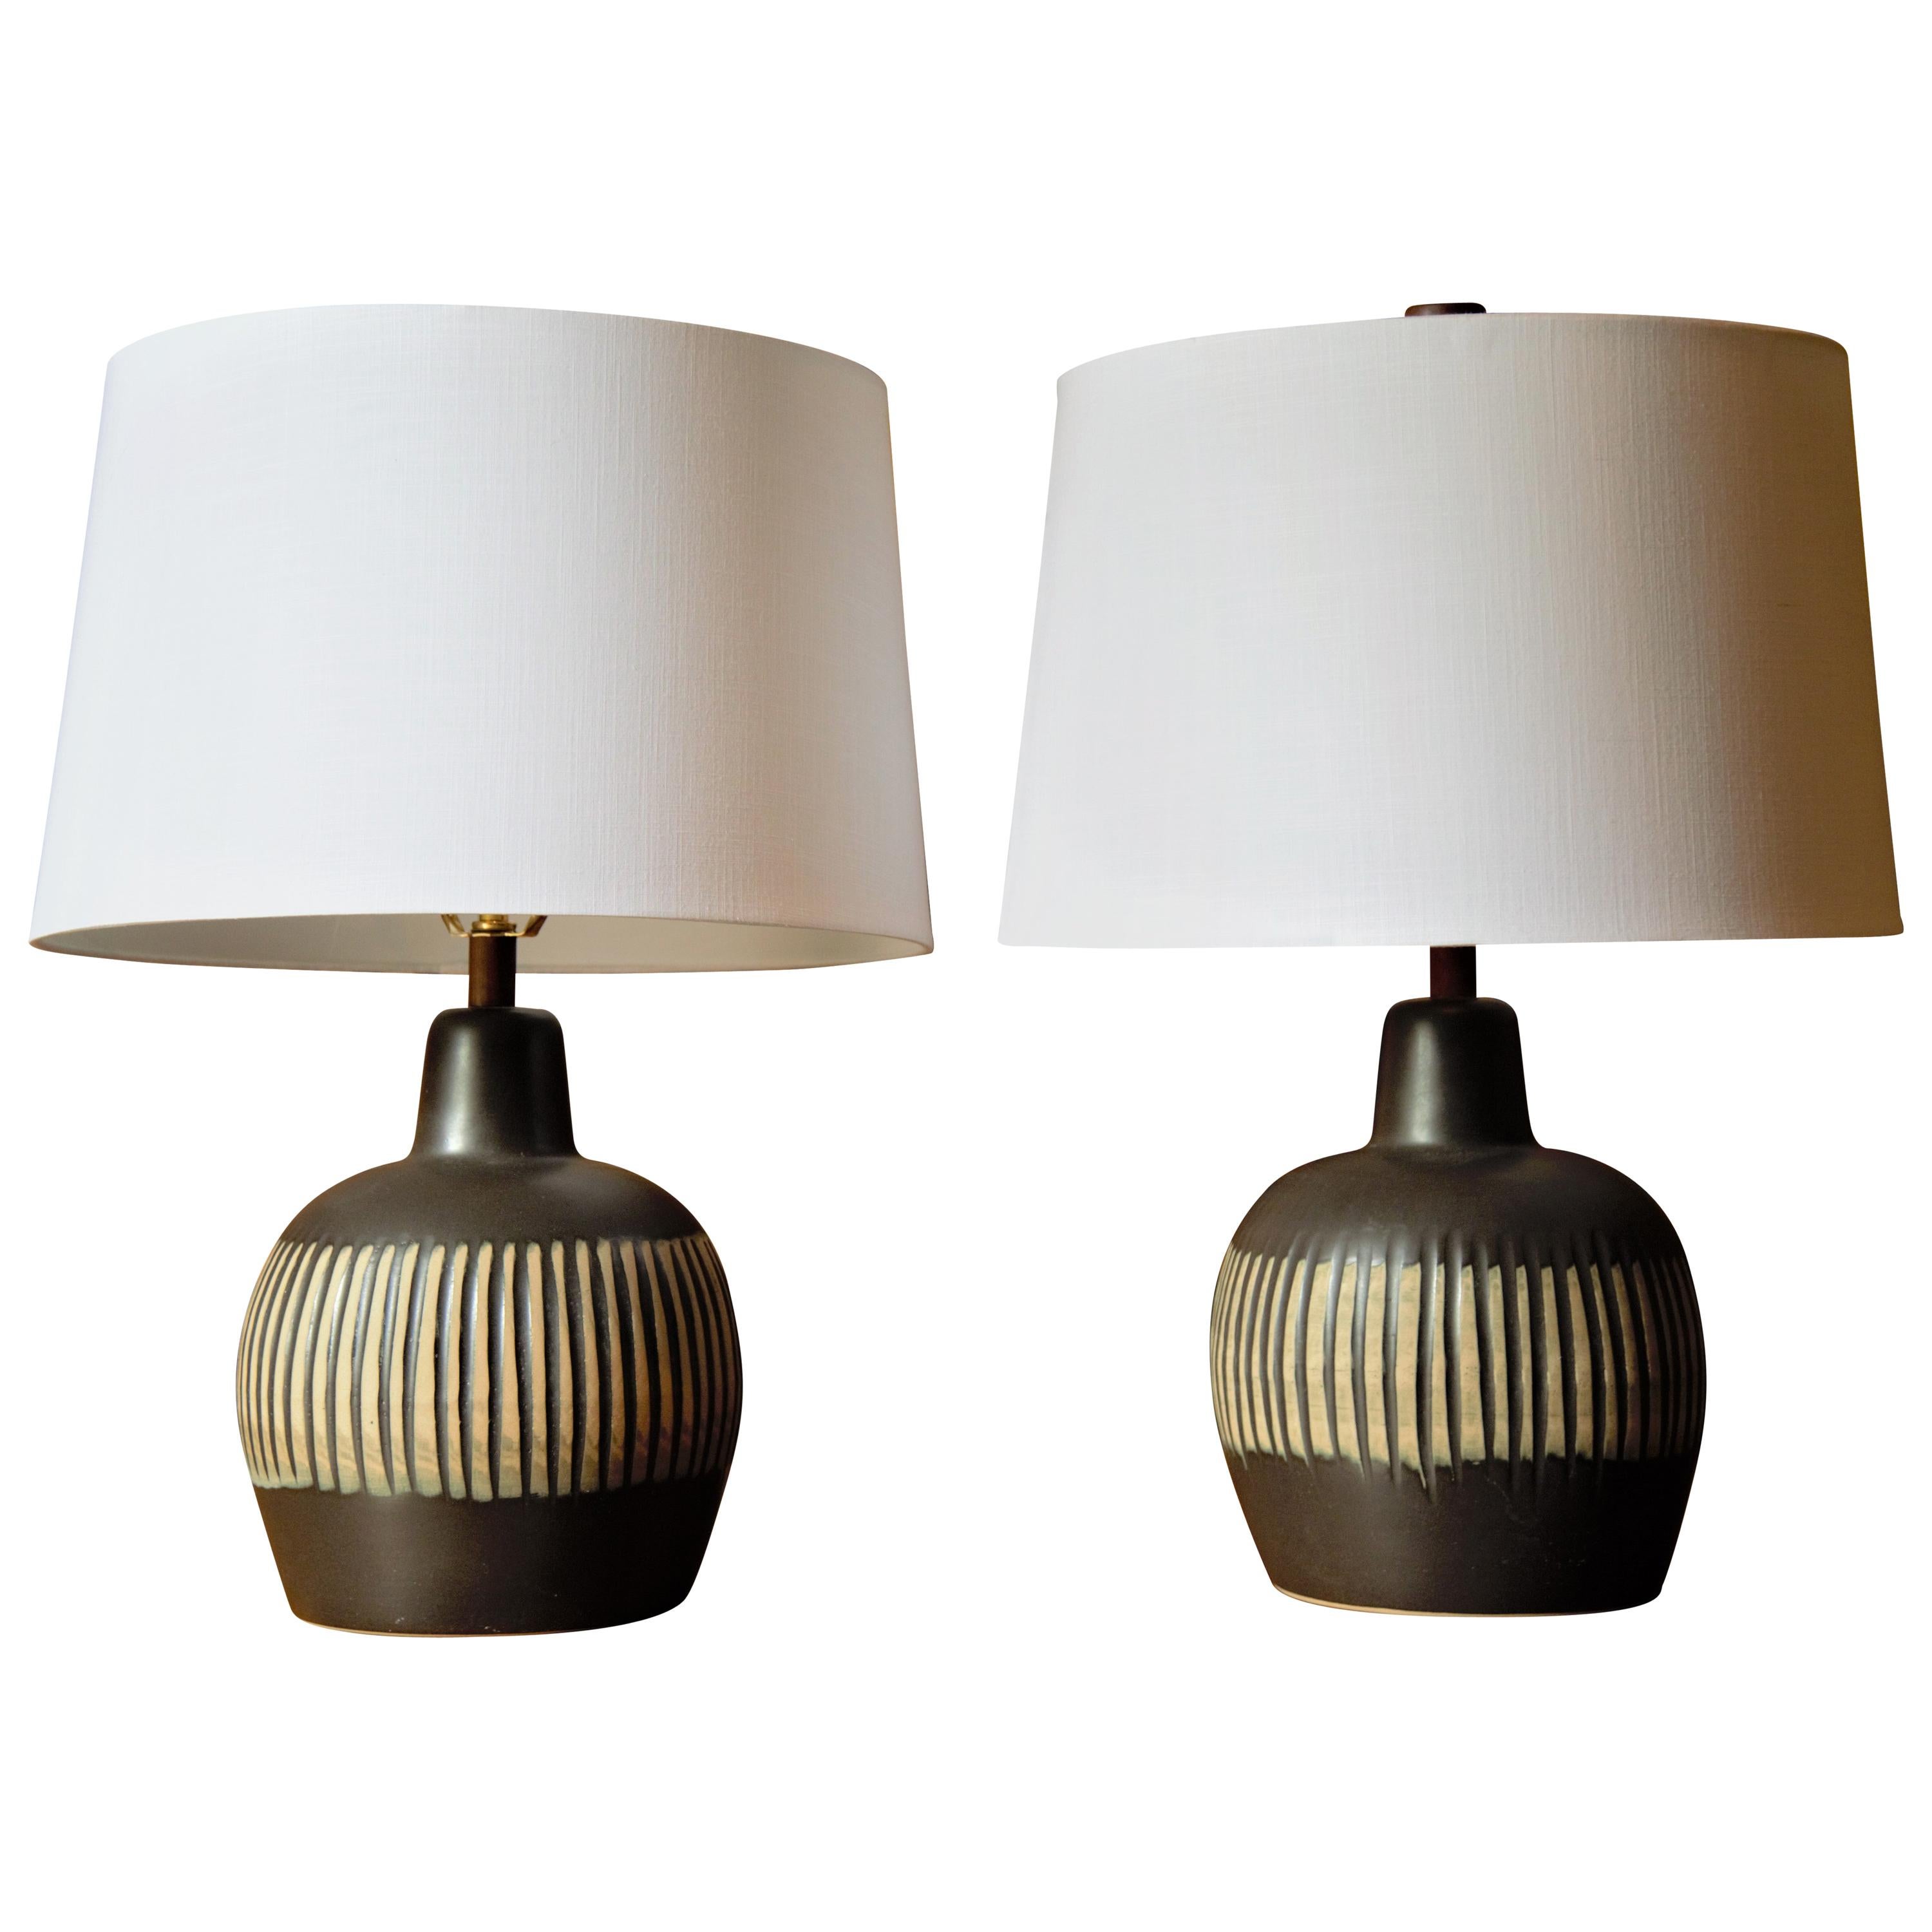 Pair of Incised Ceramic Lamps Designed by Jane Gordon and Martz